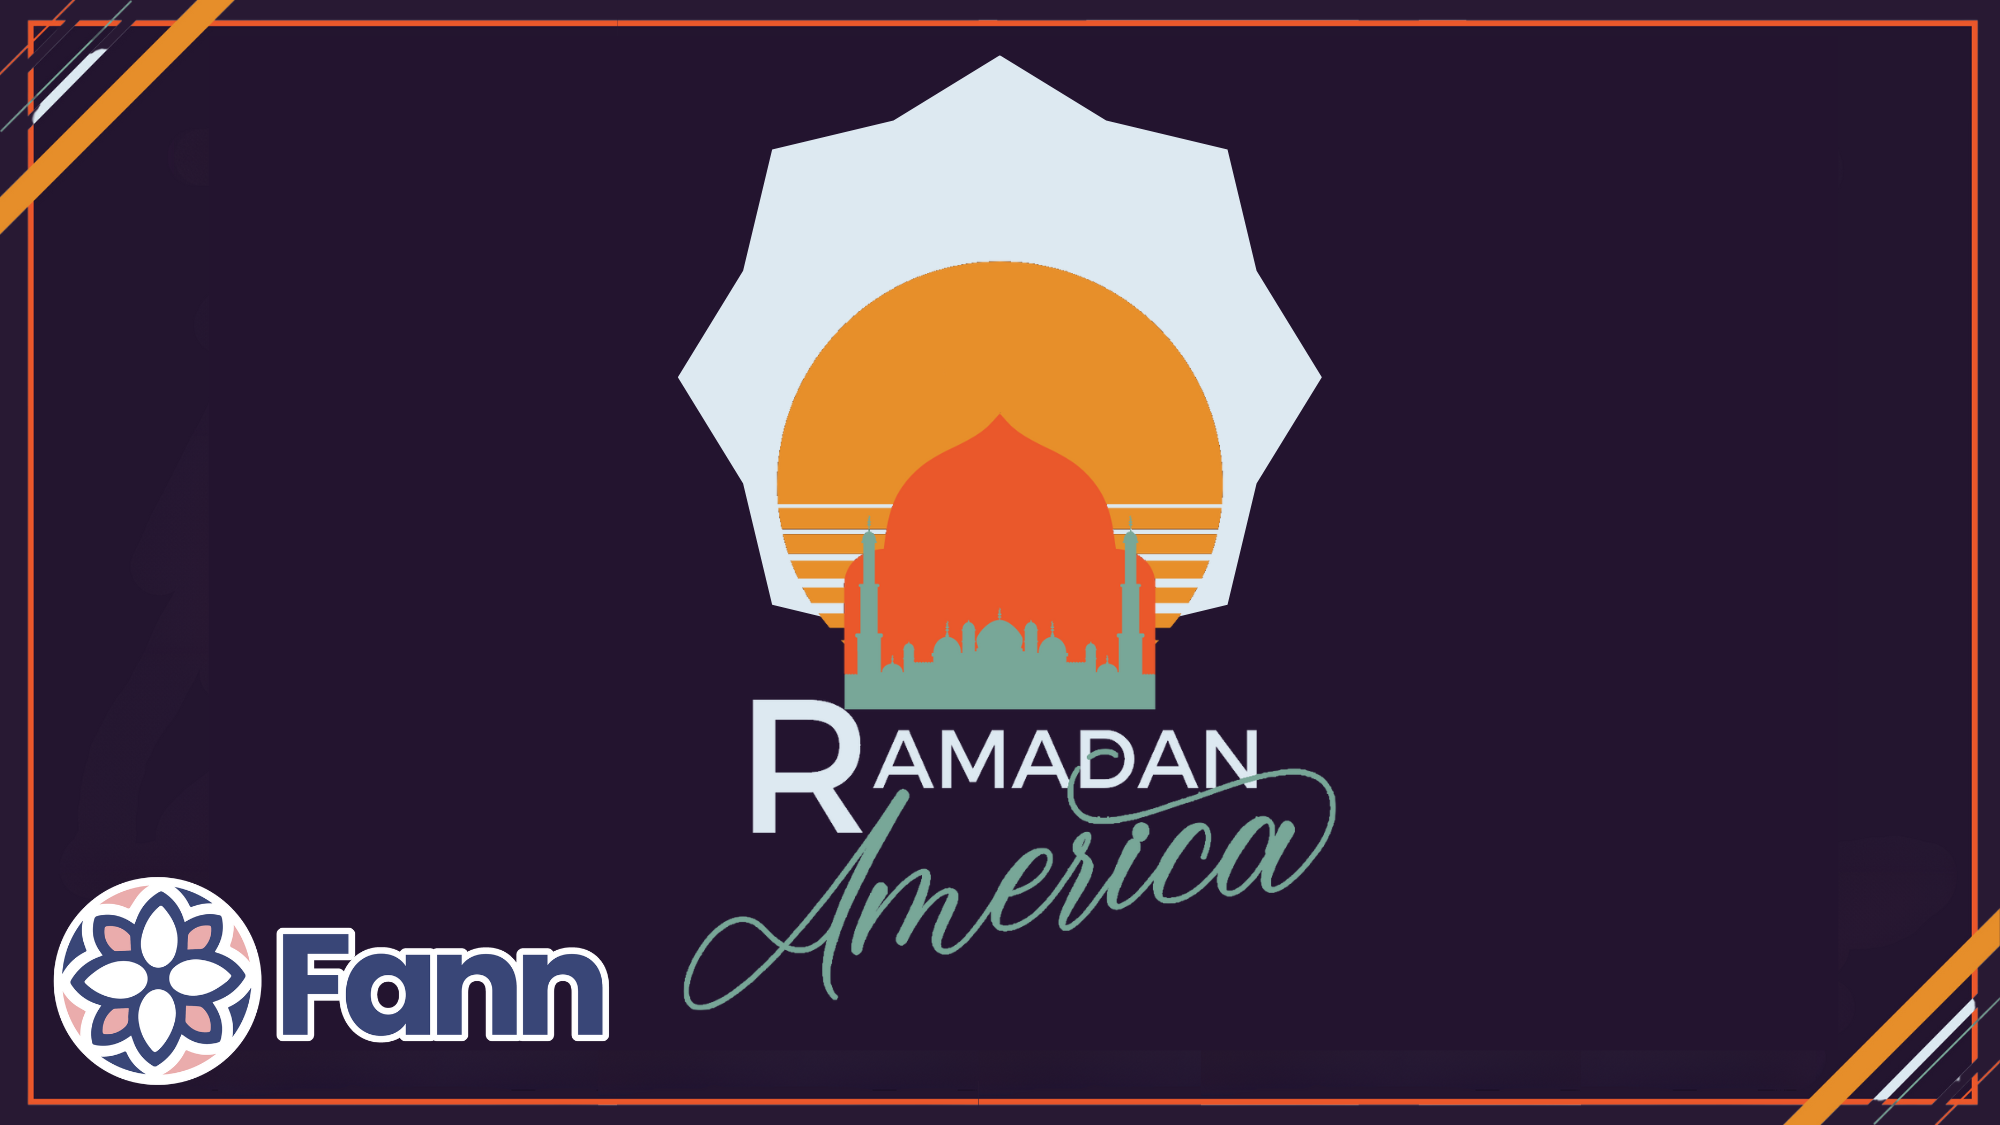 Muslim Film Creatives Unite for Unprecedented Production "Ramadan America"